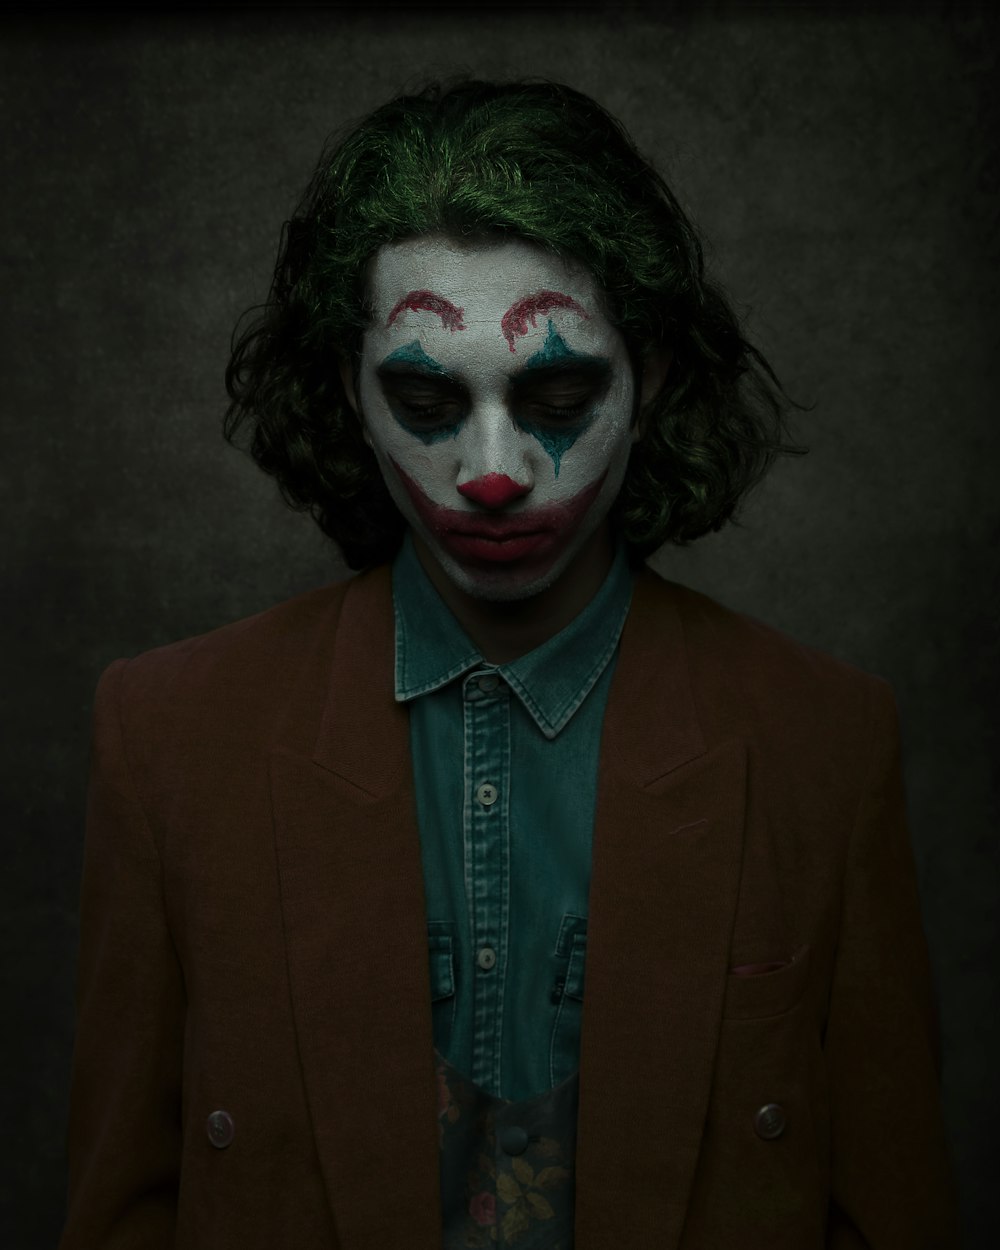 Mann im Joker-Make-up